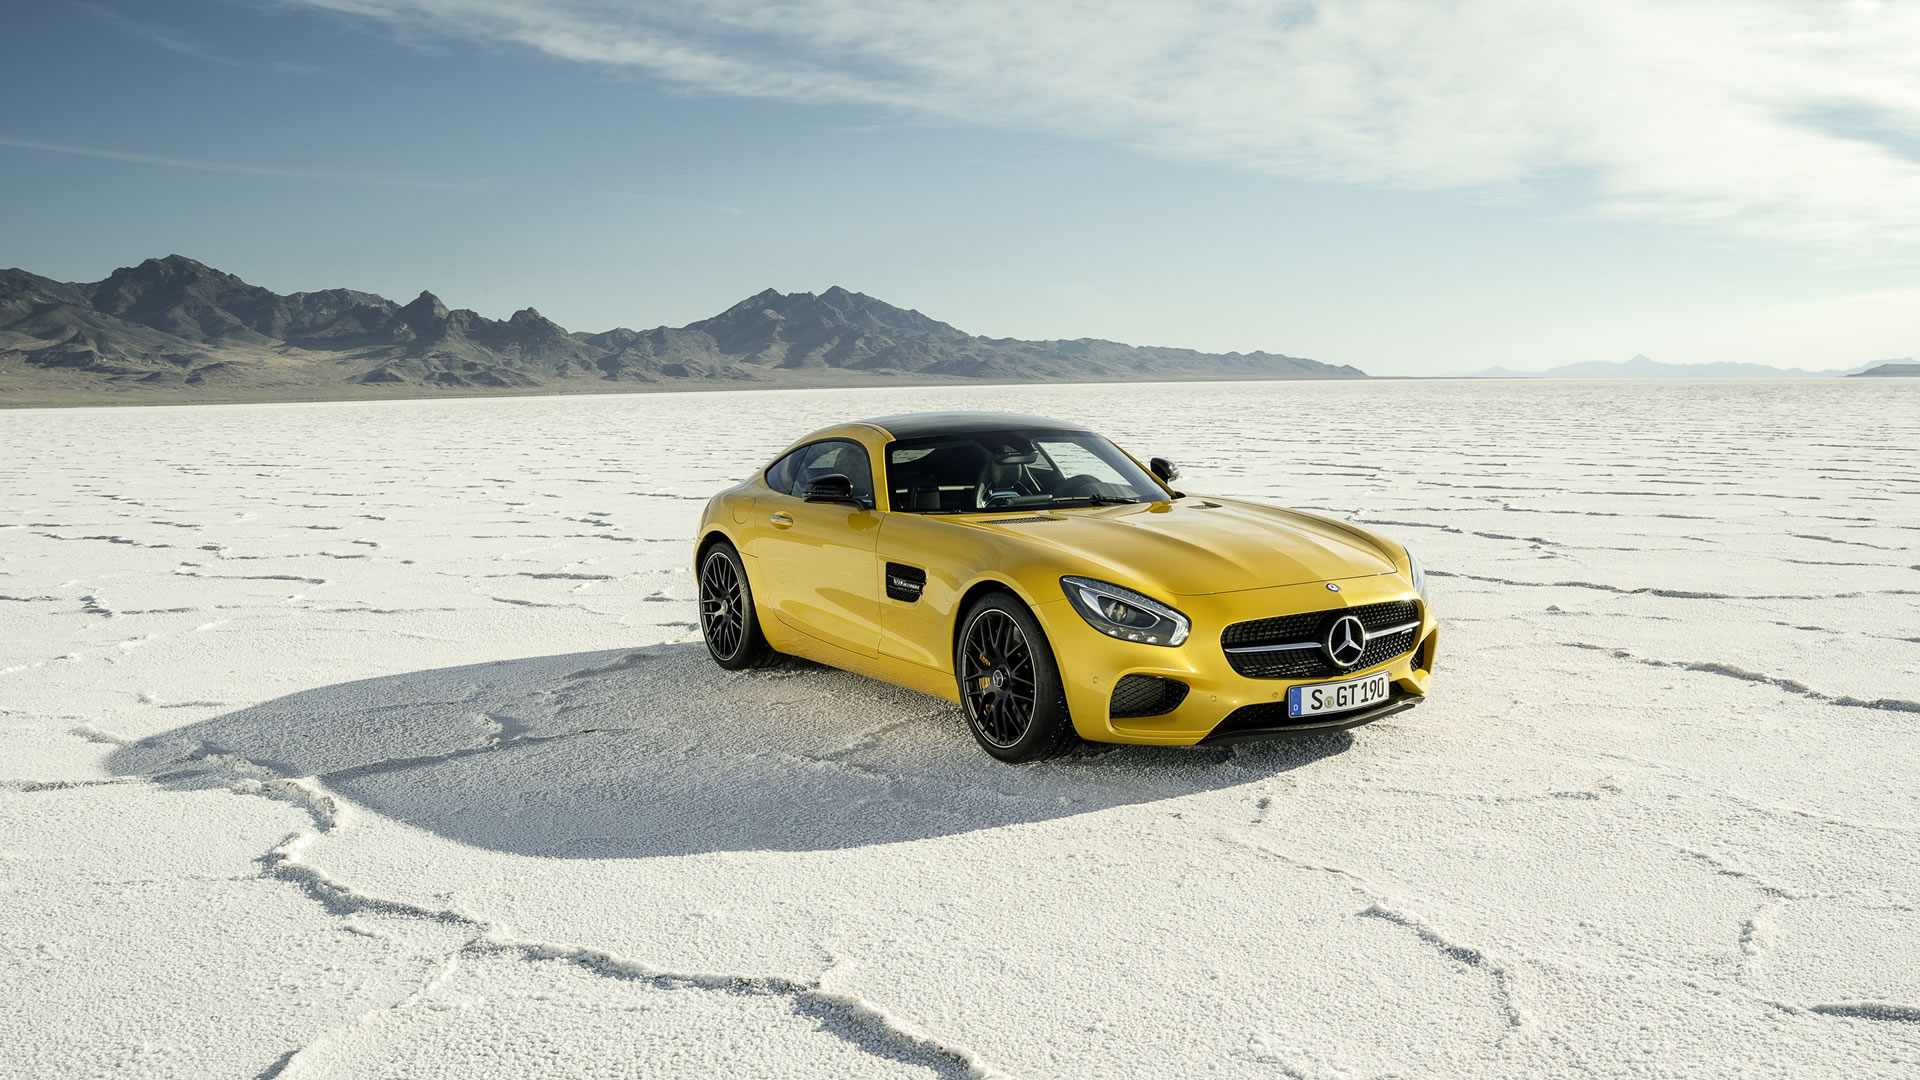 2016 Mercedes Benz AMG GT S Wallpaper   1920 x 1080 salt lake yellow